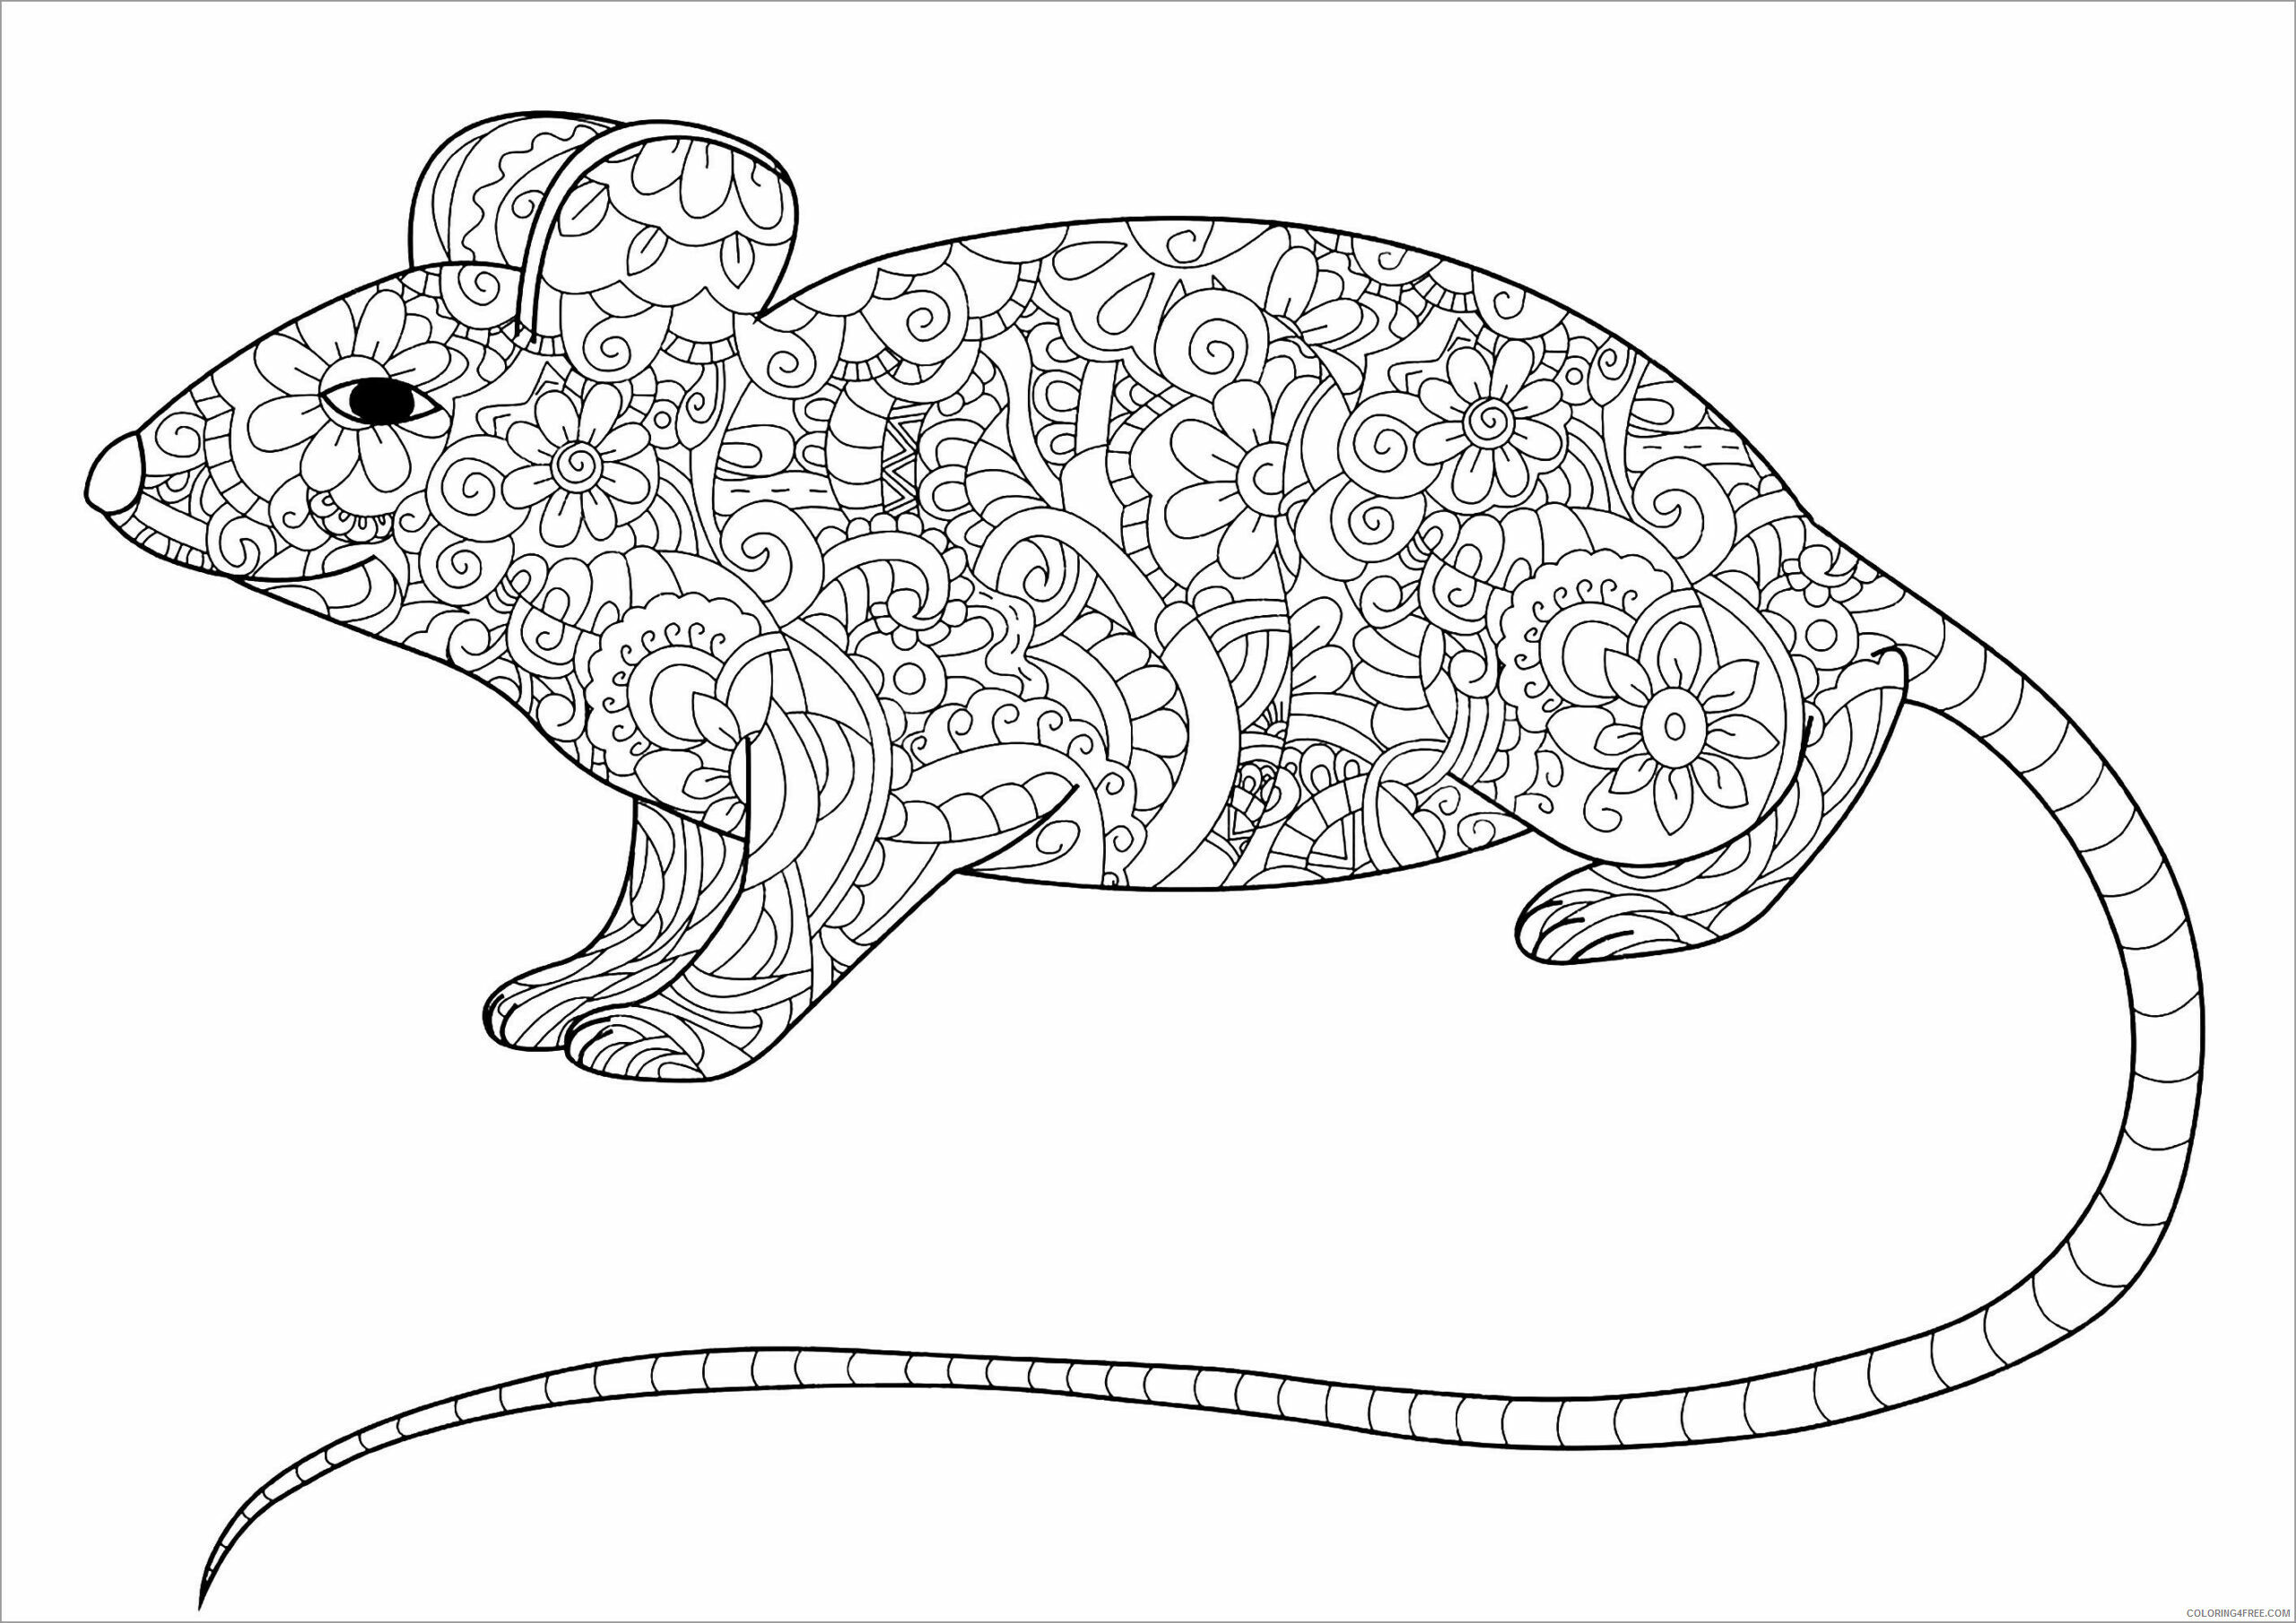 Adult Coloring Page Fantasy Creature Liontari Doodle Printable Colouring Zen Doodle